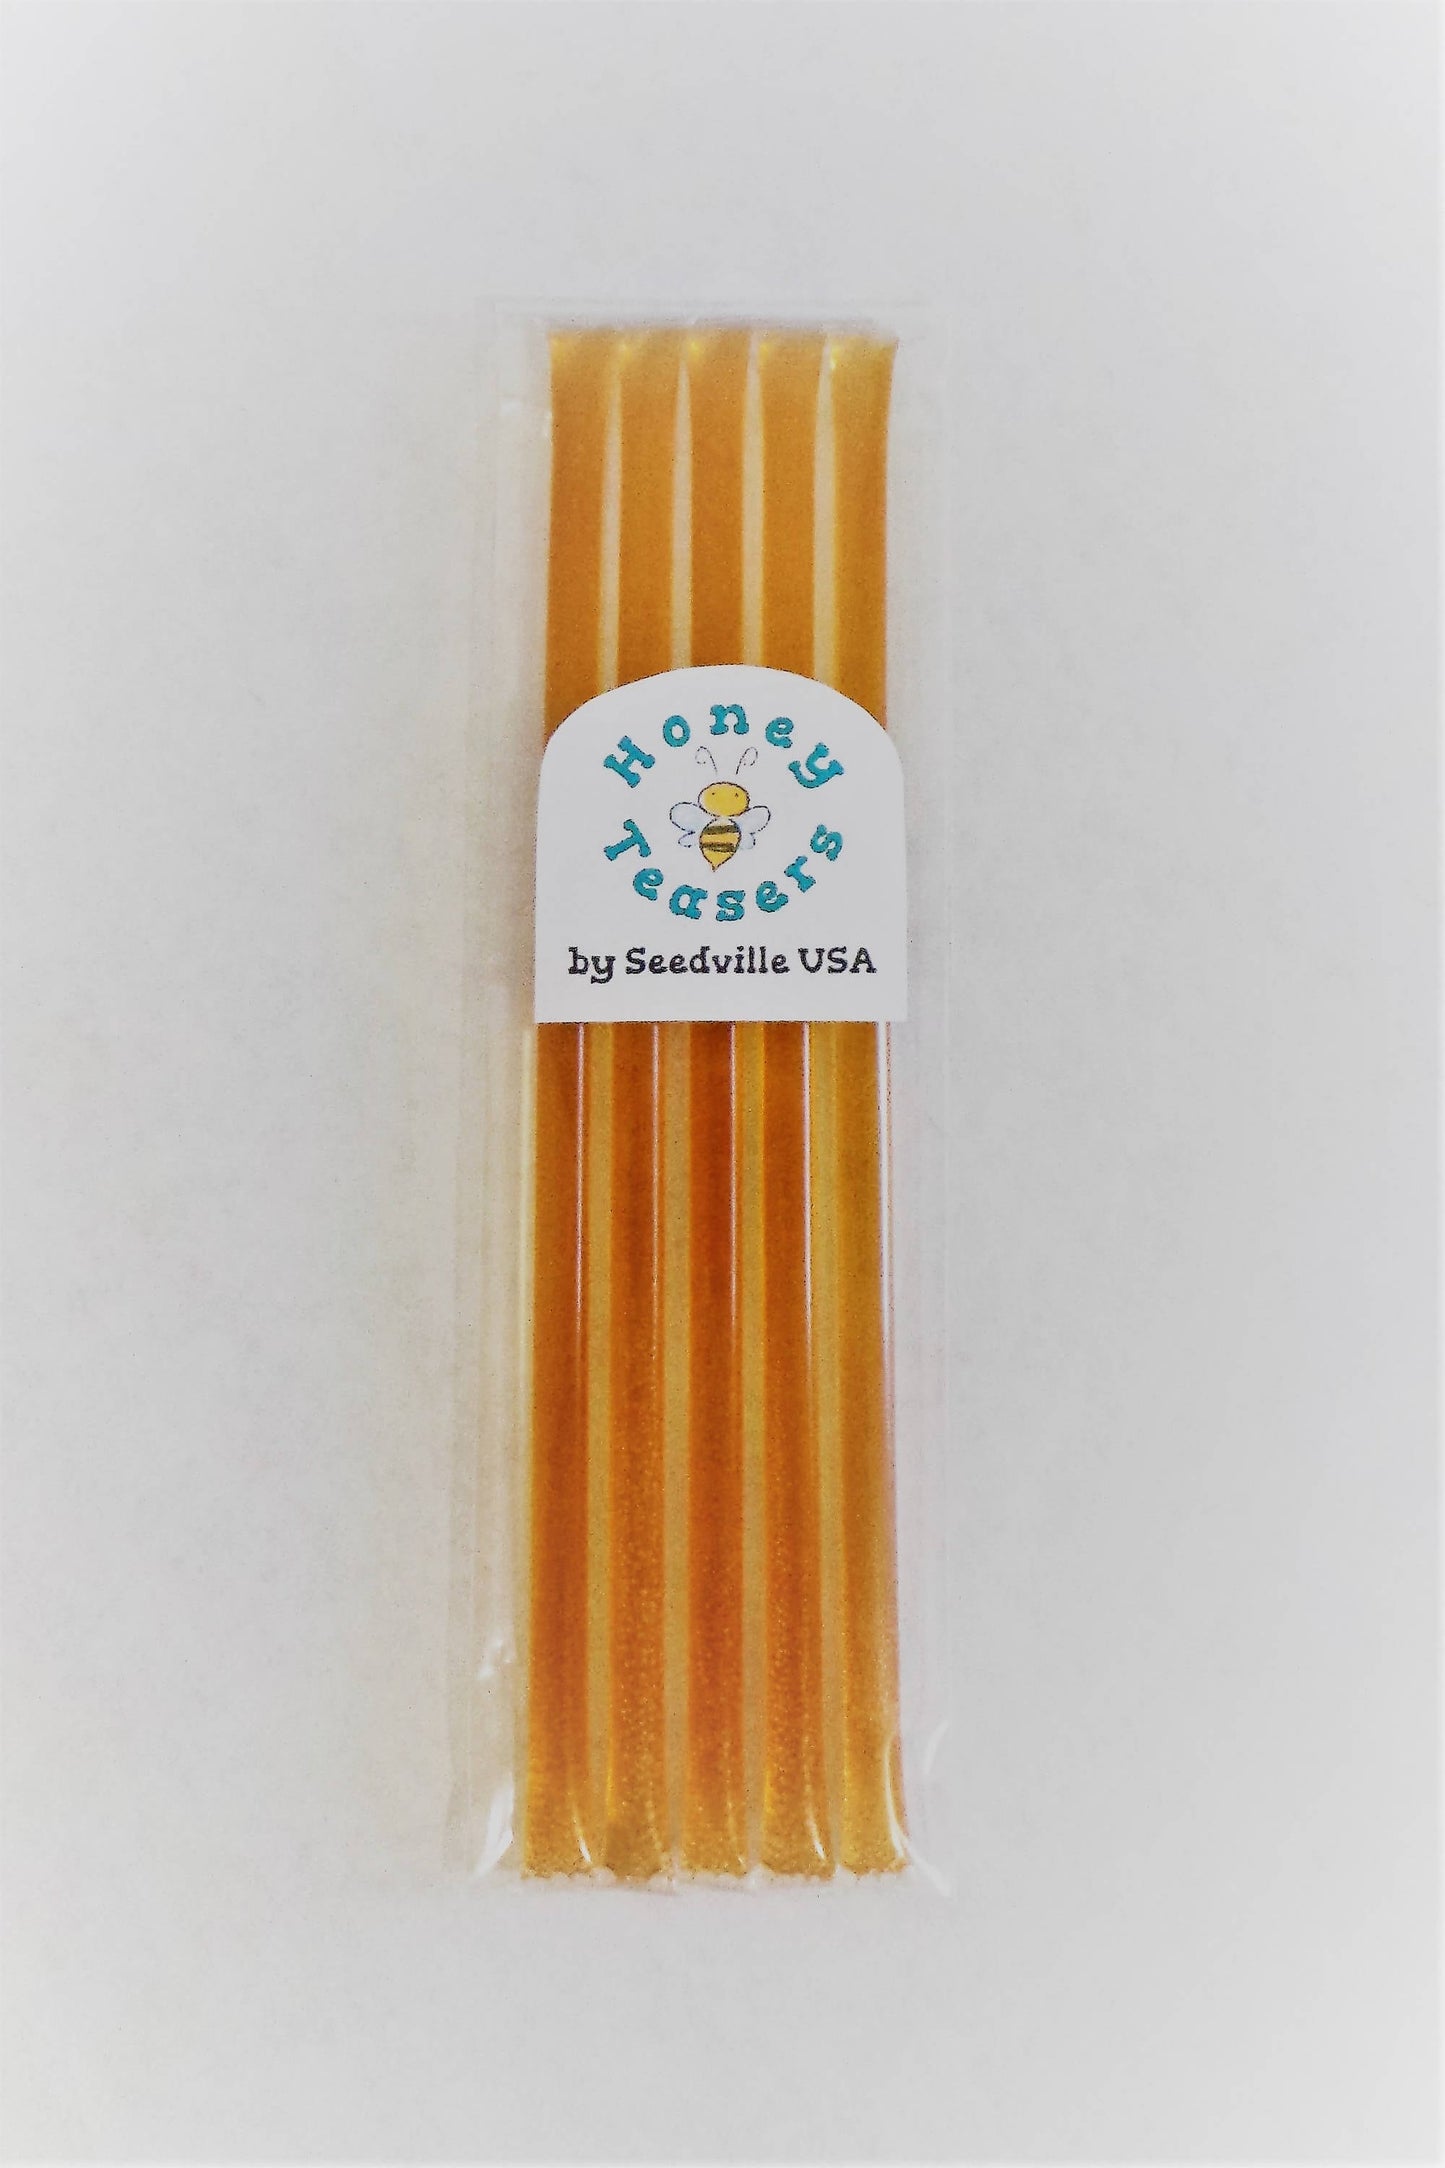 5 Pack RASPBERRY HONEY TEASERS Natural Honey Snack Sticks Honeystix Straws